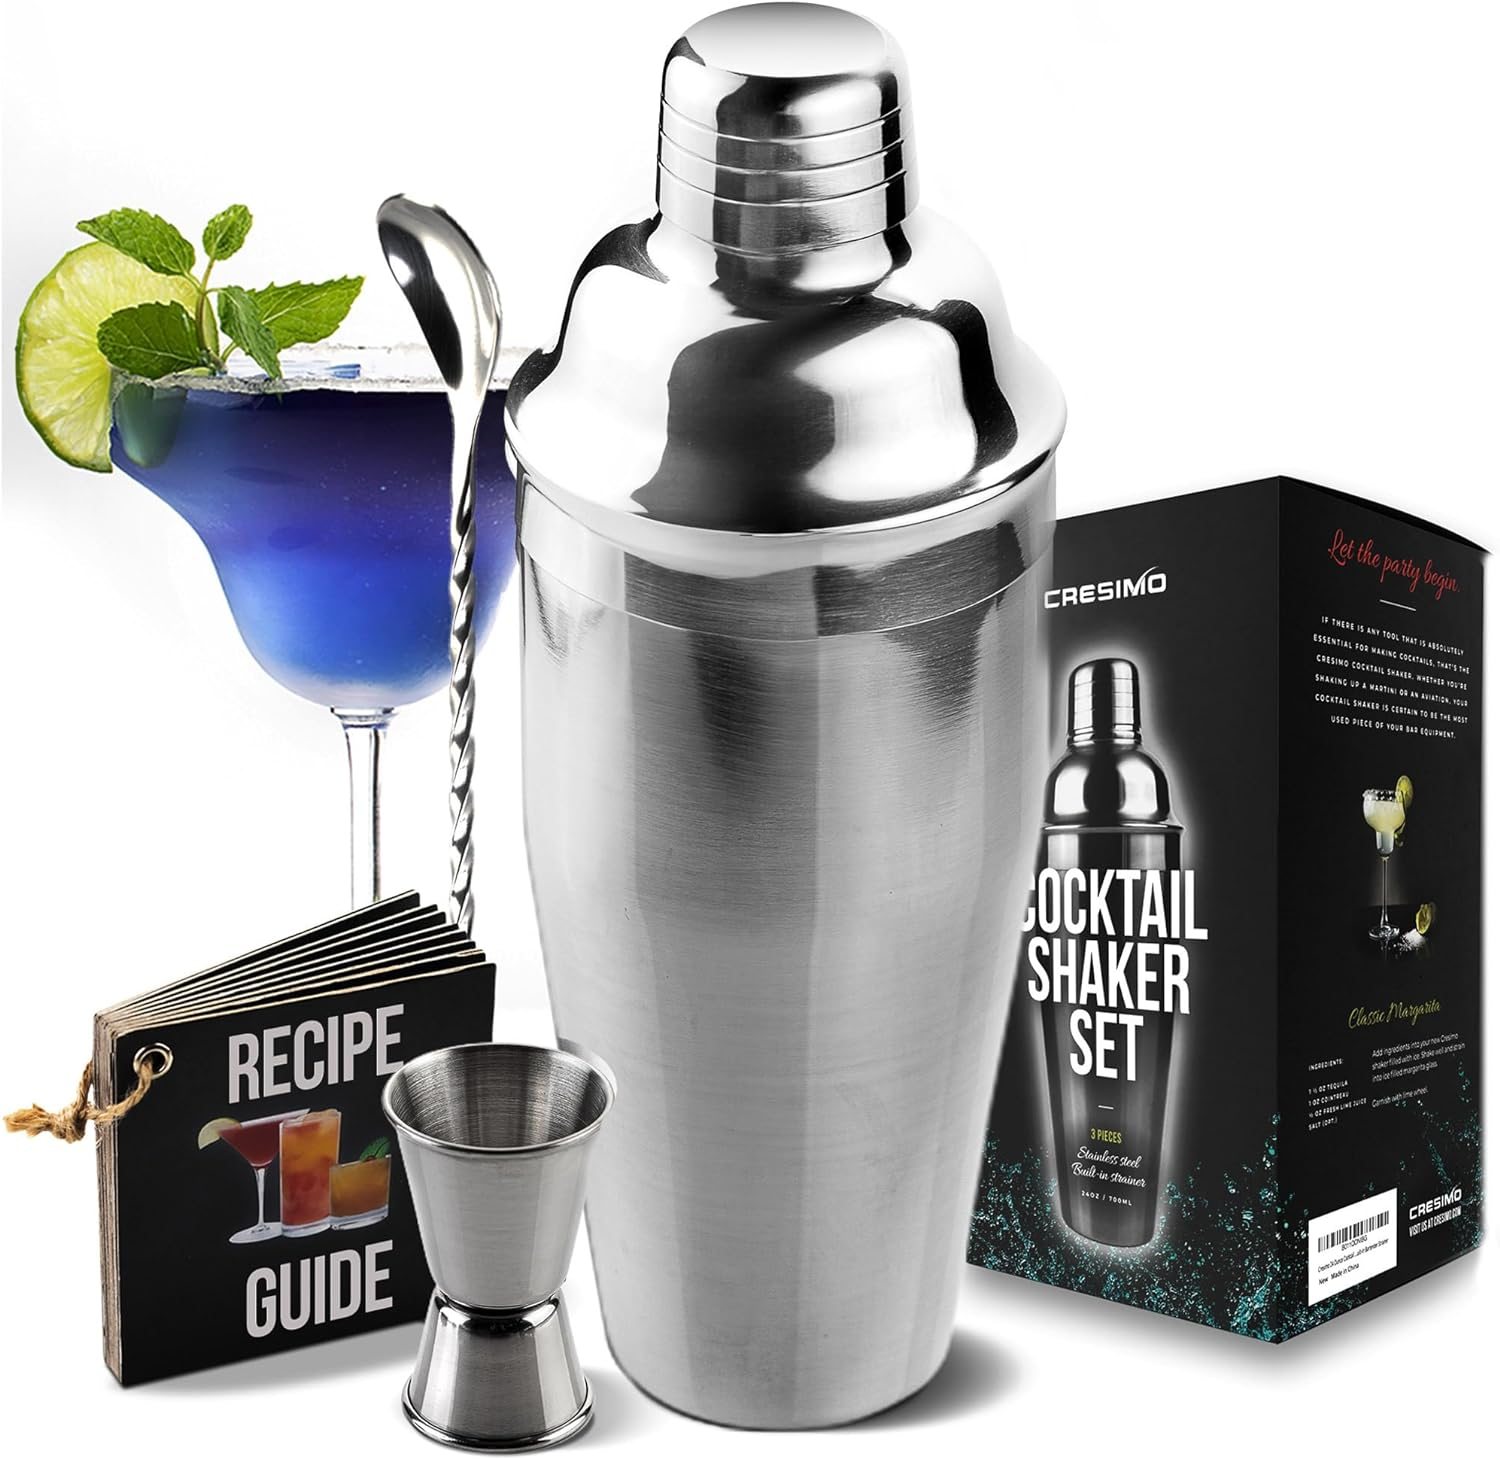 https://cdn.bestreviews.com/images/v4desktop/product-matrix/best-cocktail-shakers-24-ounce-shaket-set-cresimo-bar-accessories-home-bar-martini-jigger.jpg